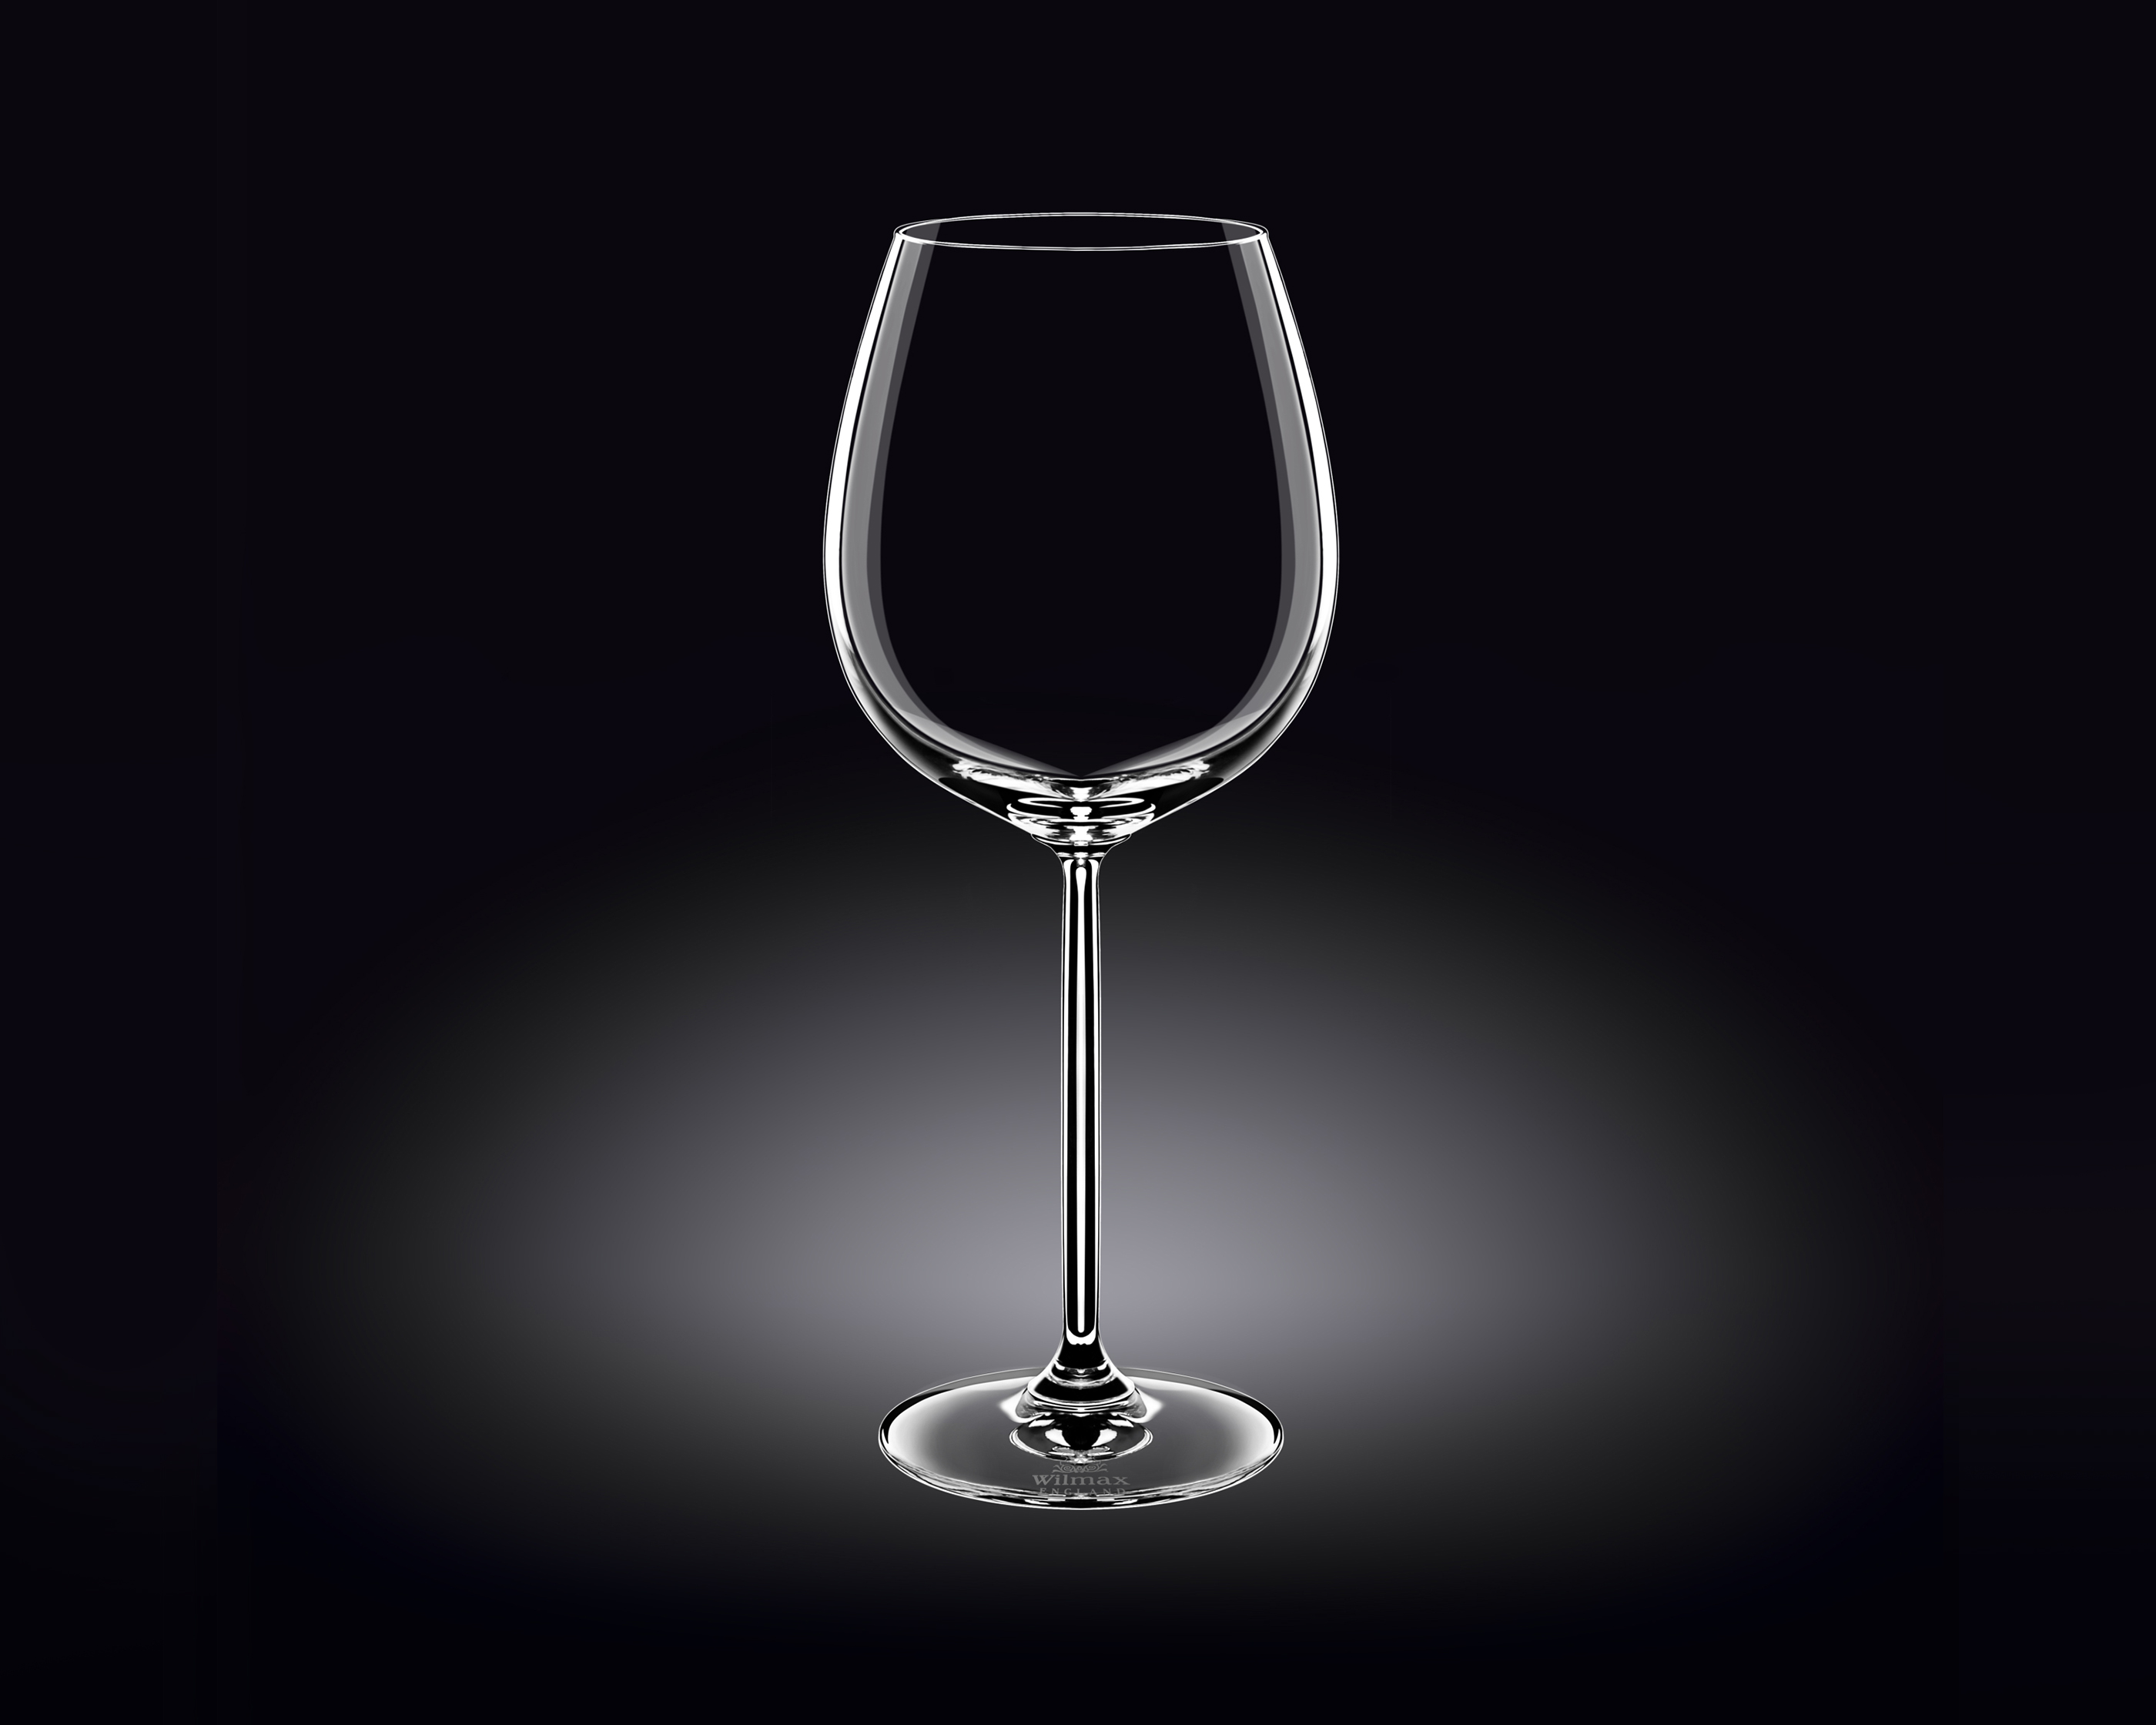 Набор бокалов для вина WILMAX Cristalline 2шт 480мл инд. уп.